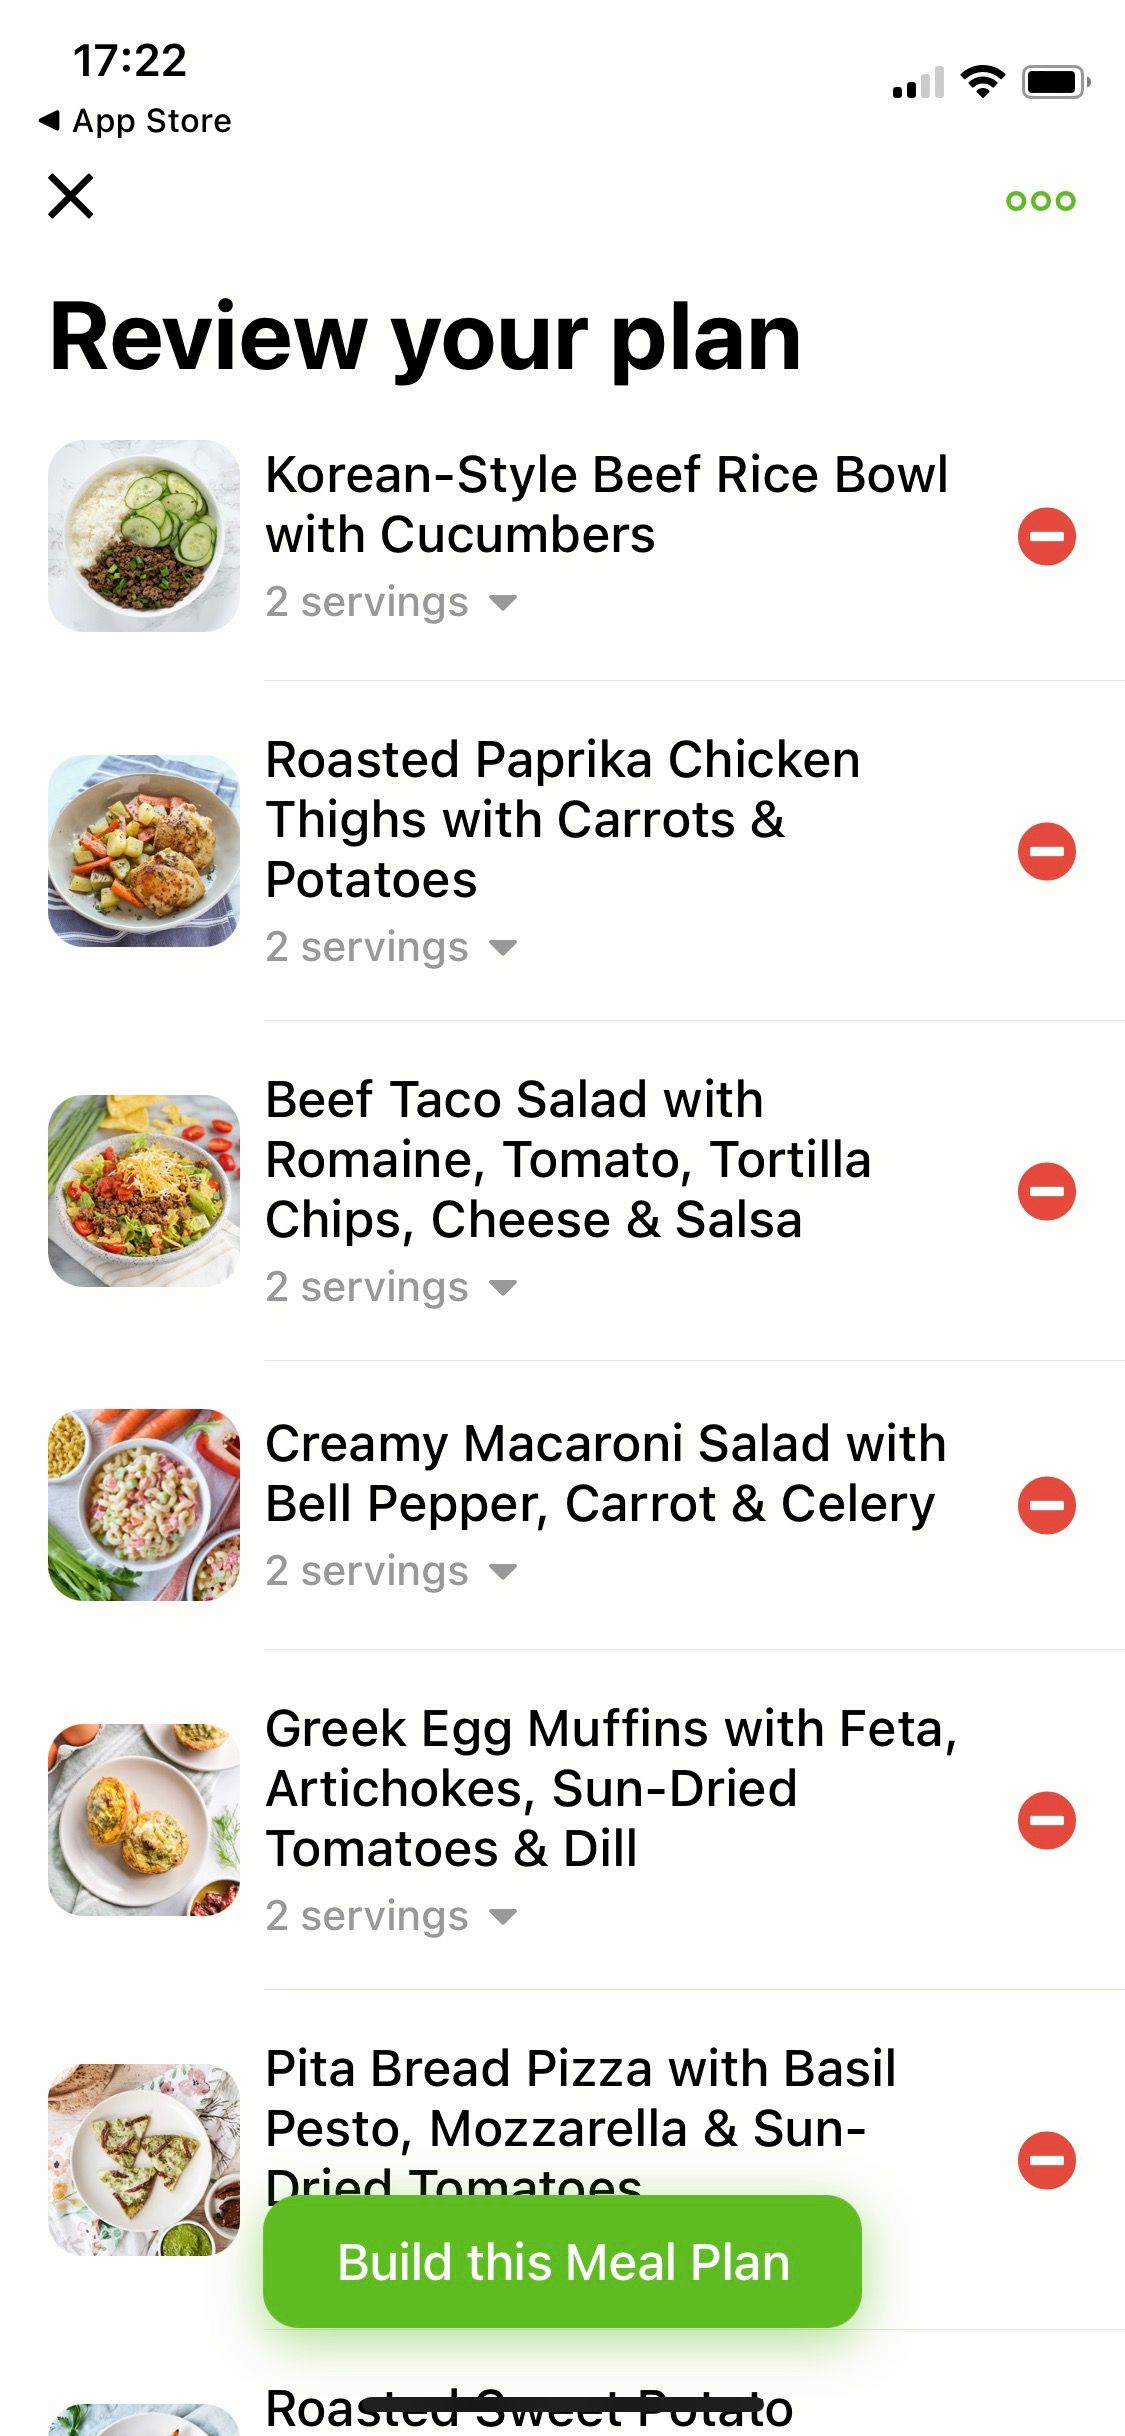 Screenshot of Mealime app meal plan review